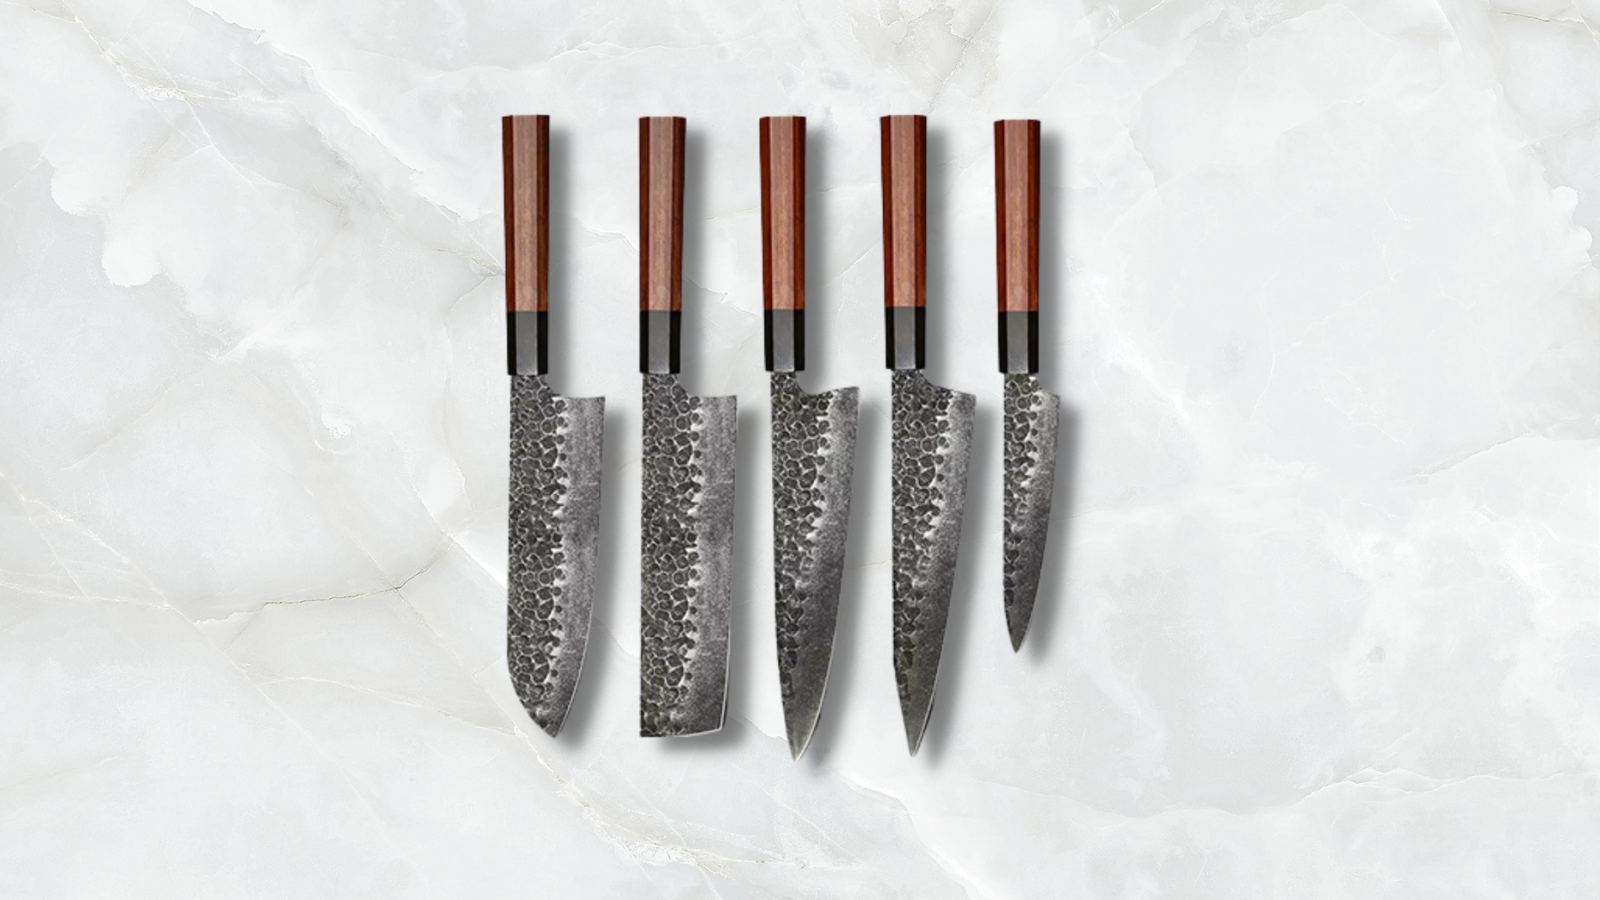 Ryori knife set with grey and white background